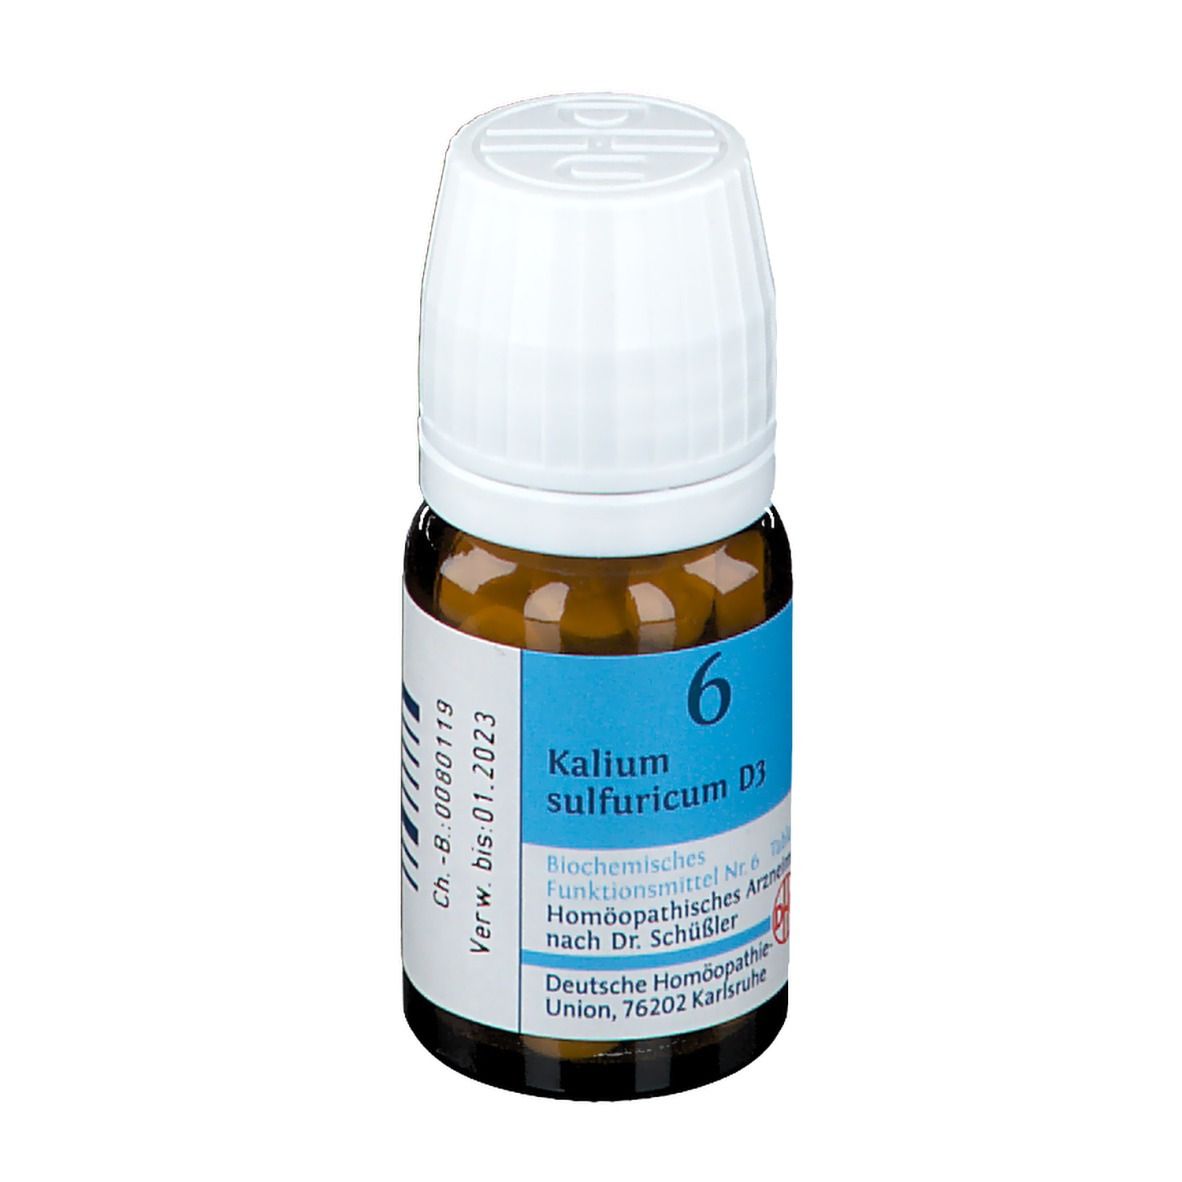 DHU Biochemie 6 Kalium sulfuricum D3